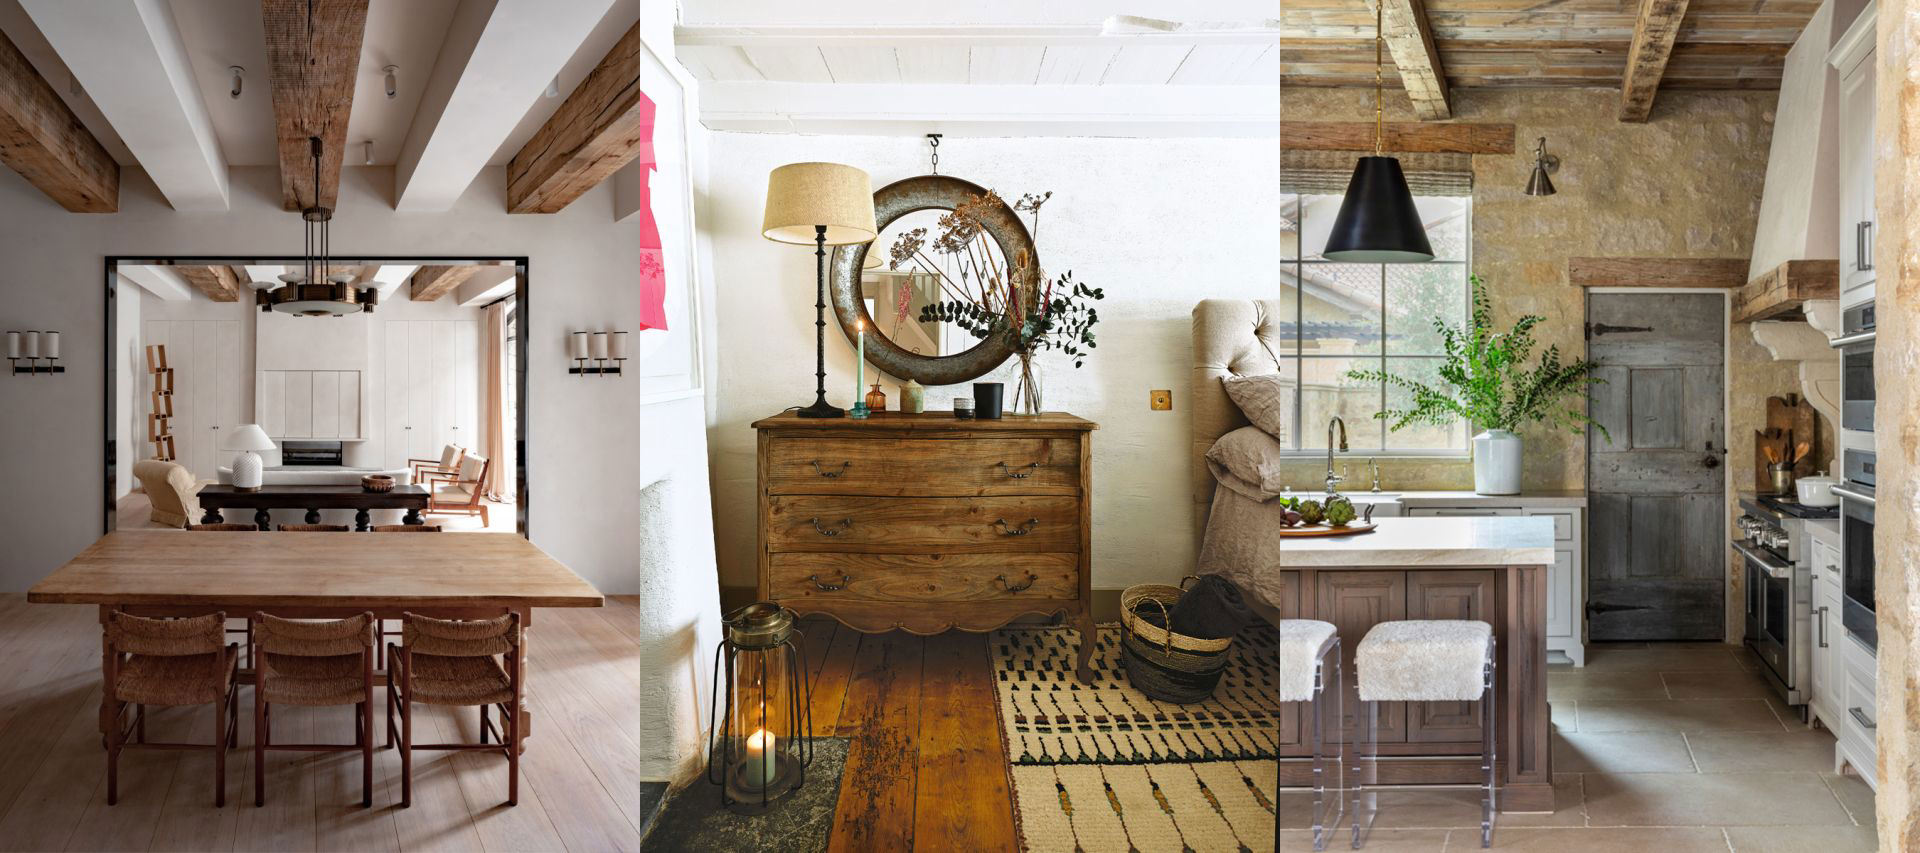 Farmhouse decor ideas – 27 ways to design a home rich with rustic charm